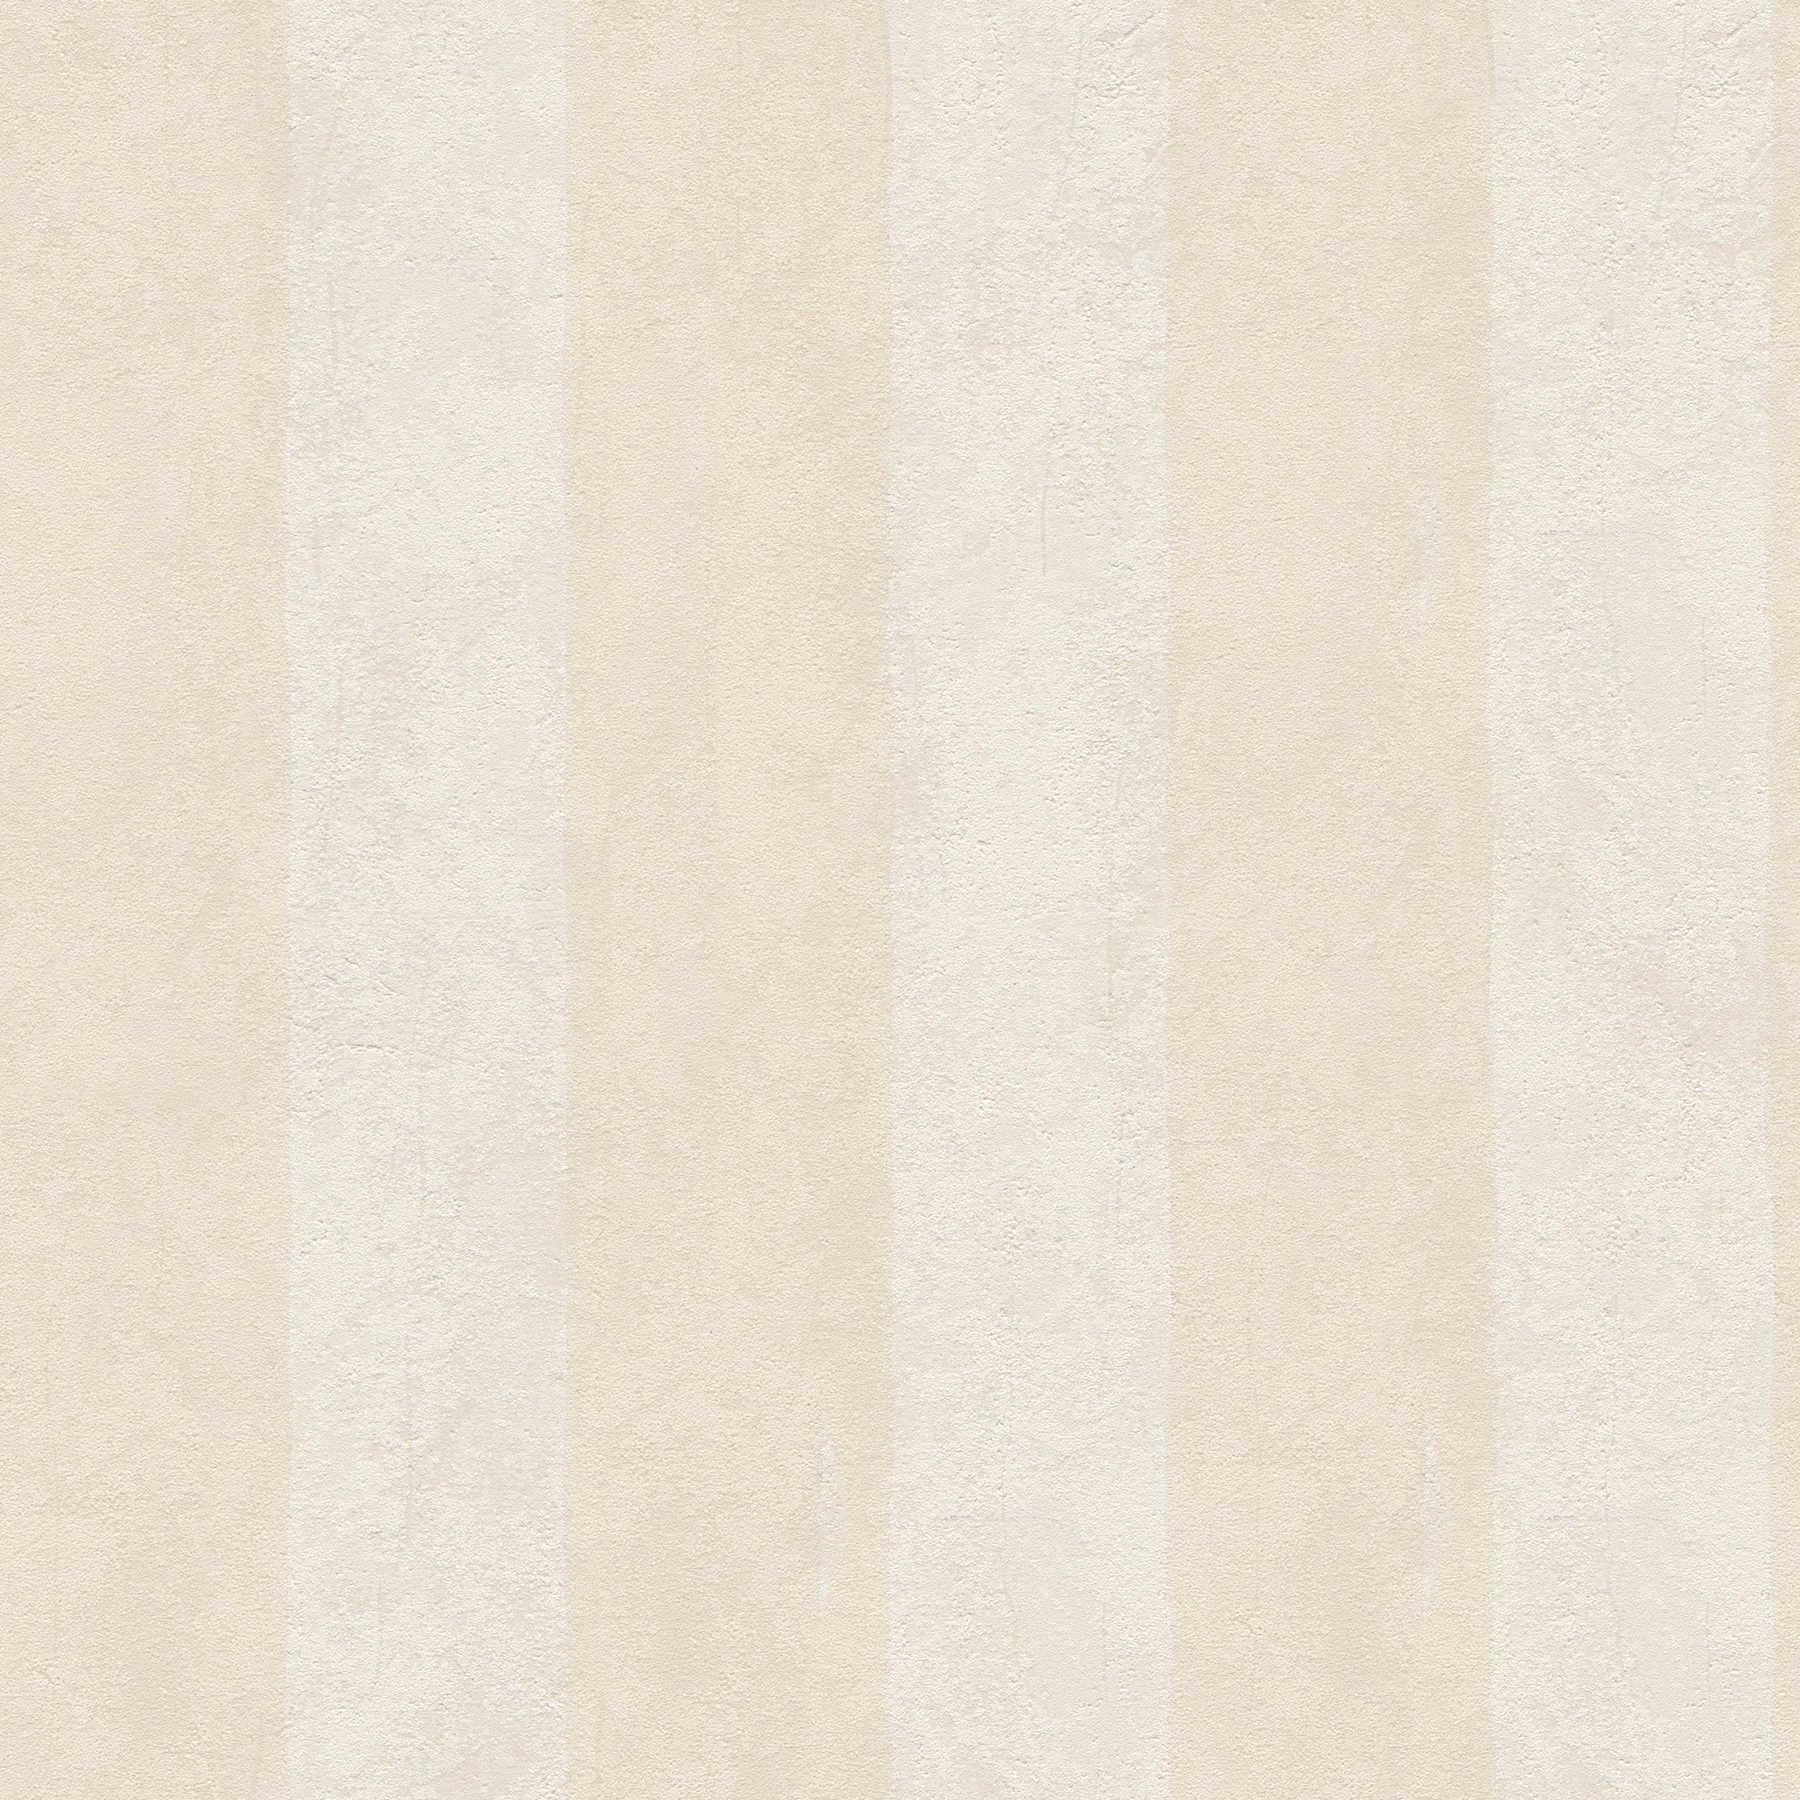 Non-woven wallpaper plaster look & stripe design - beige
